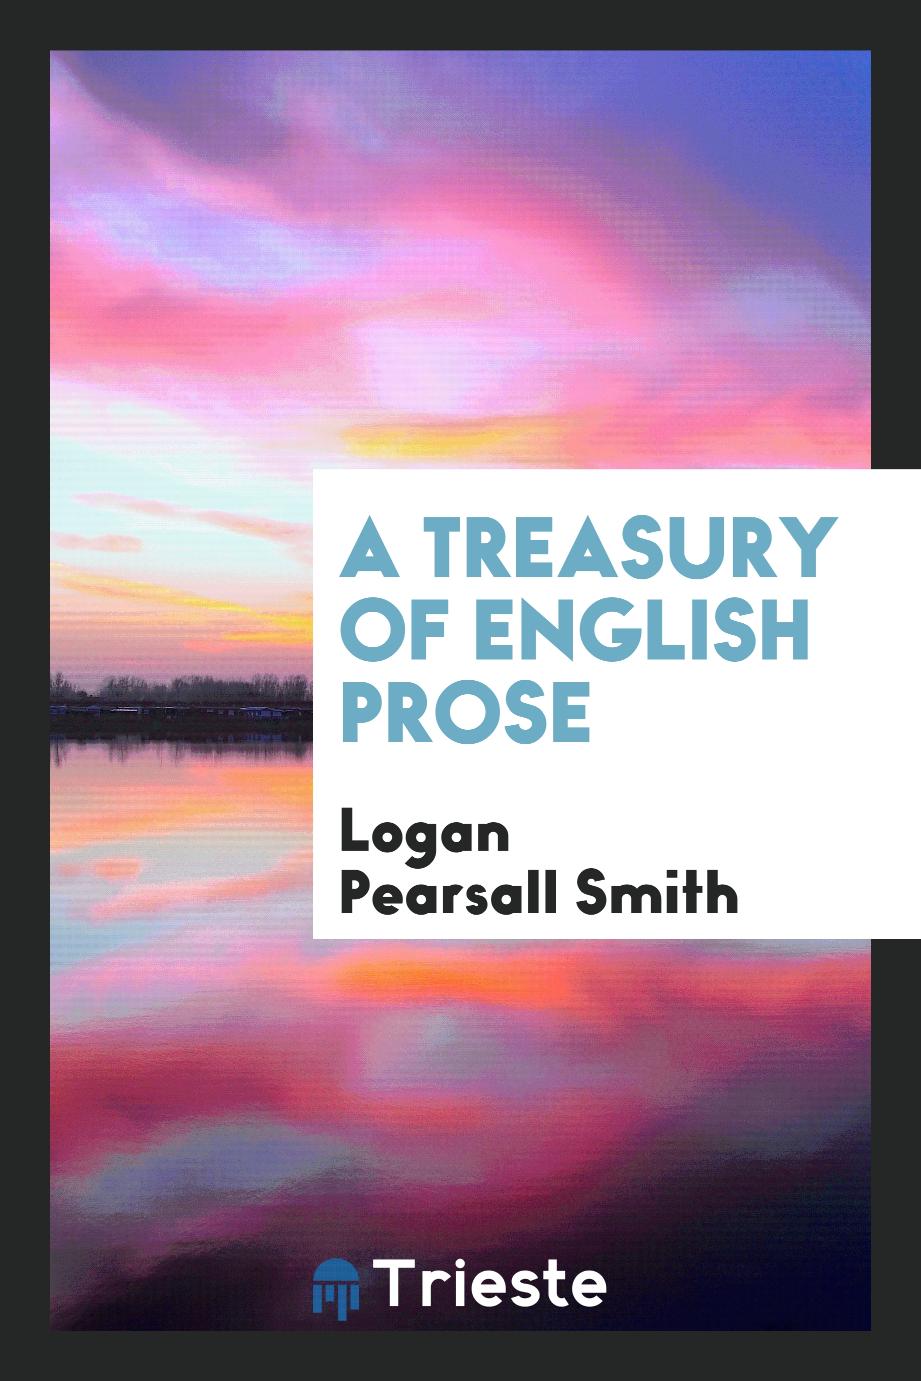 A treasury of English prose